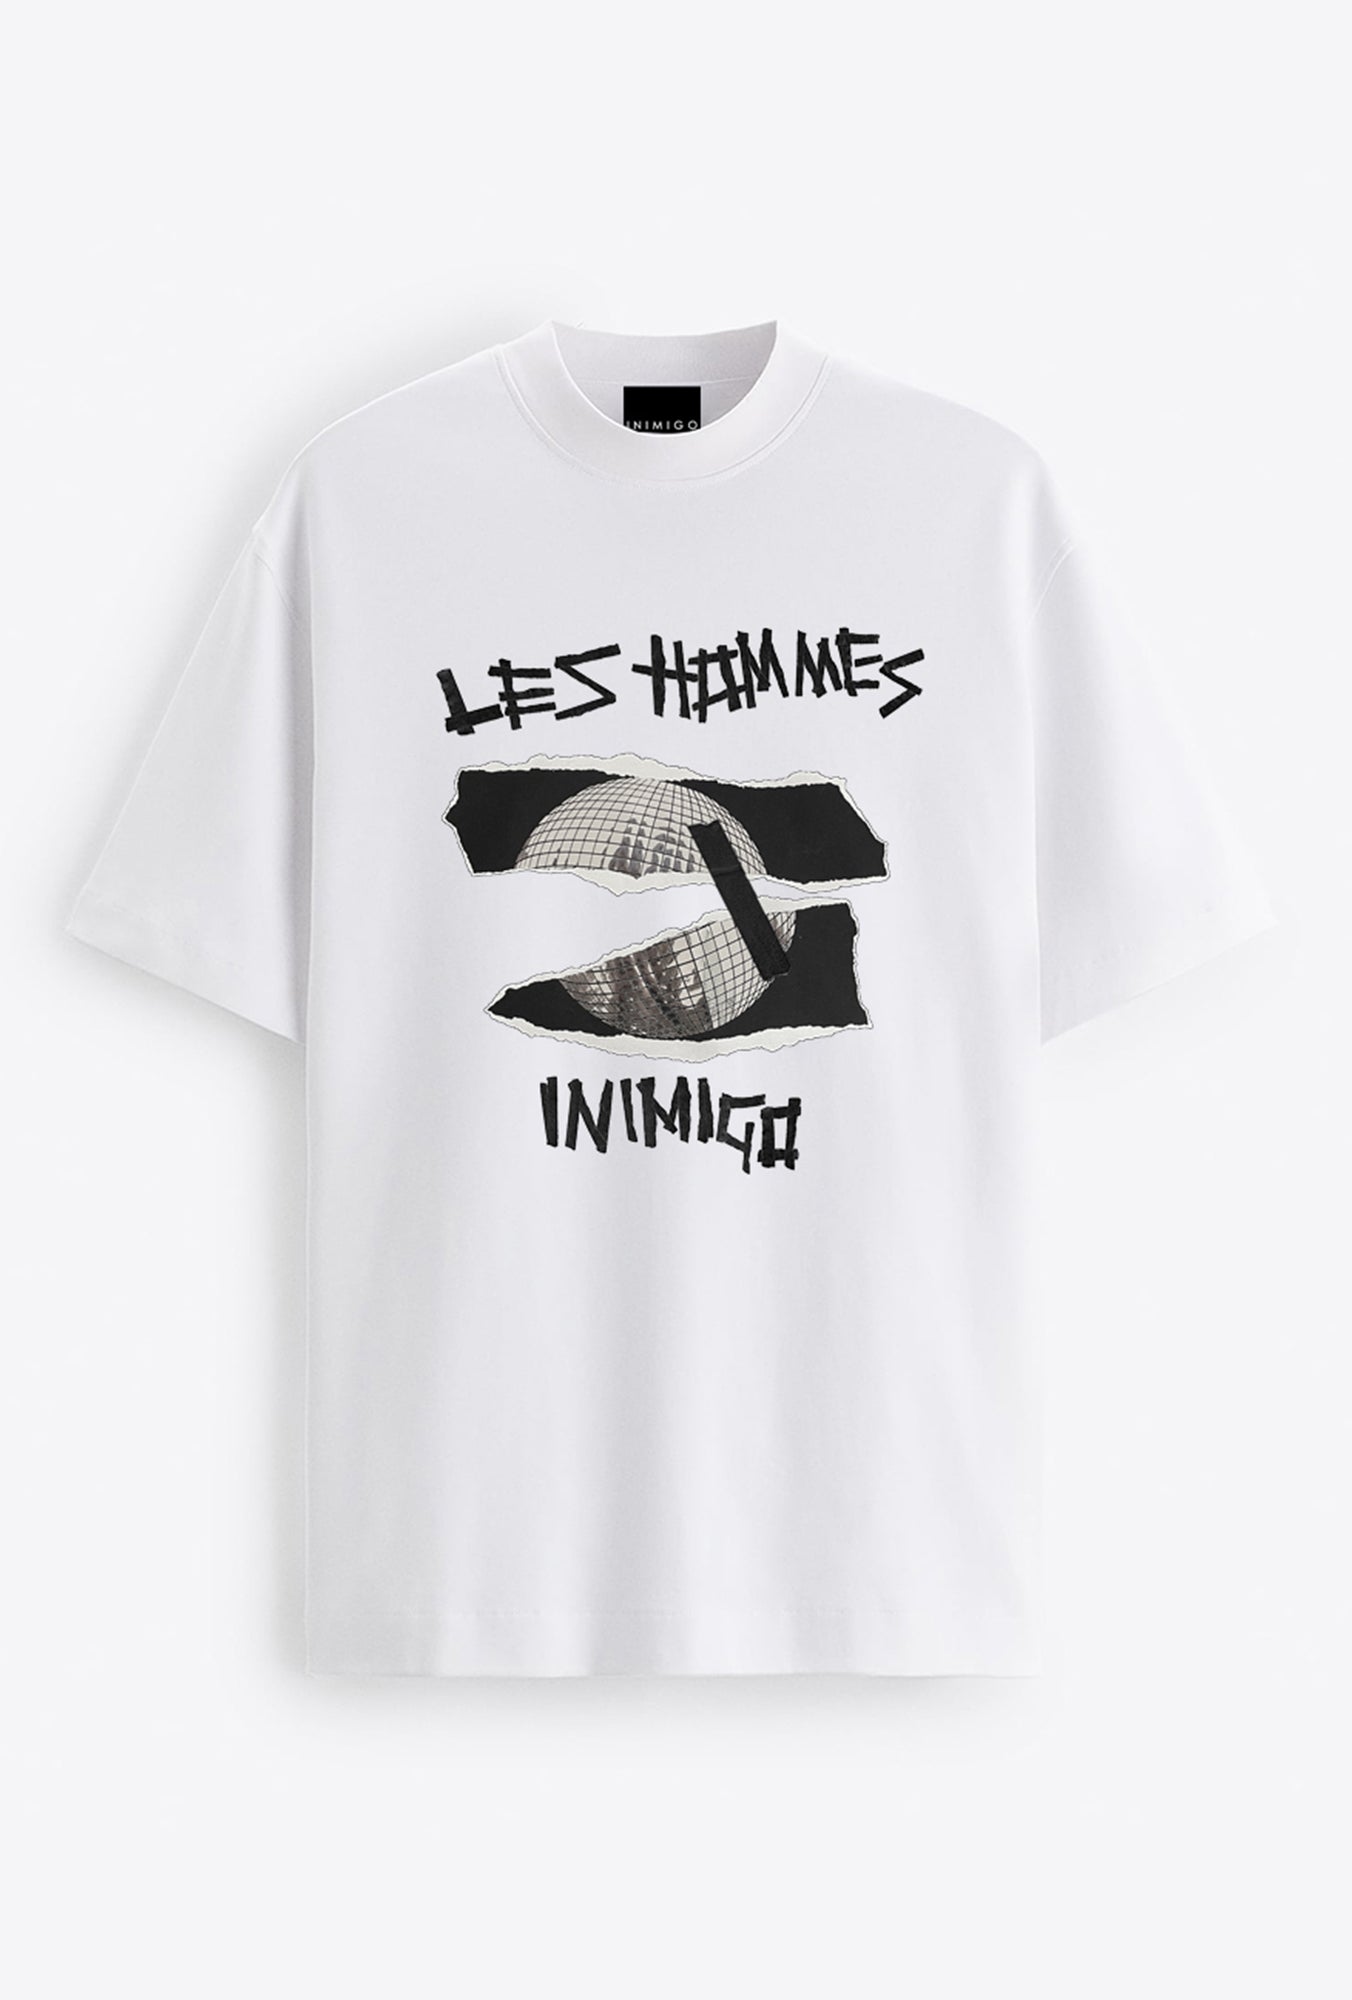 INIMIGO x Les Hommes Tape Mirror Comfort T-shirt